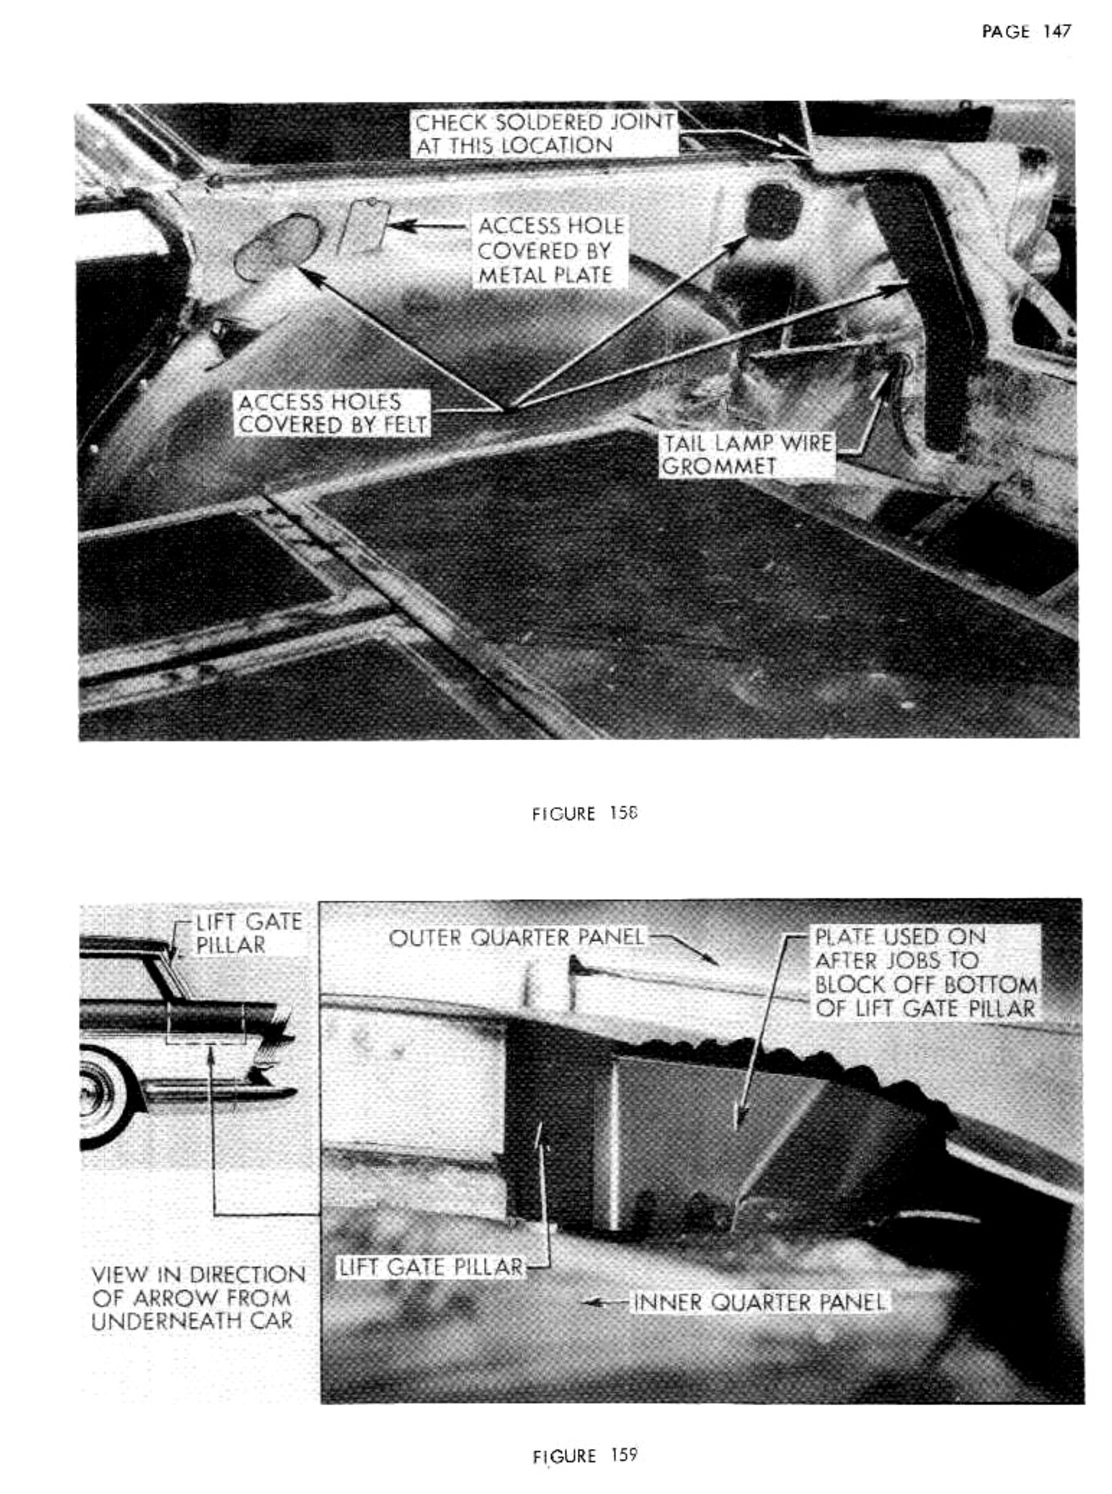 n_1957 Buick Product Service  Bulletins-148-148.jpg